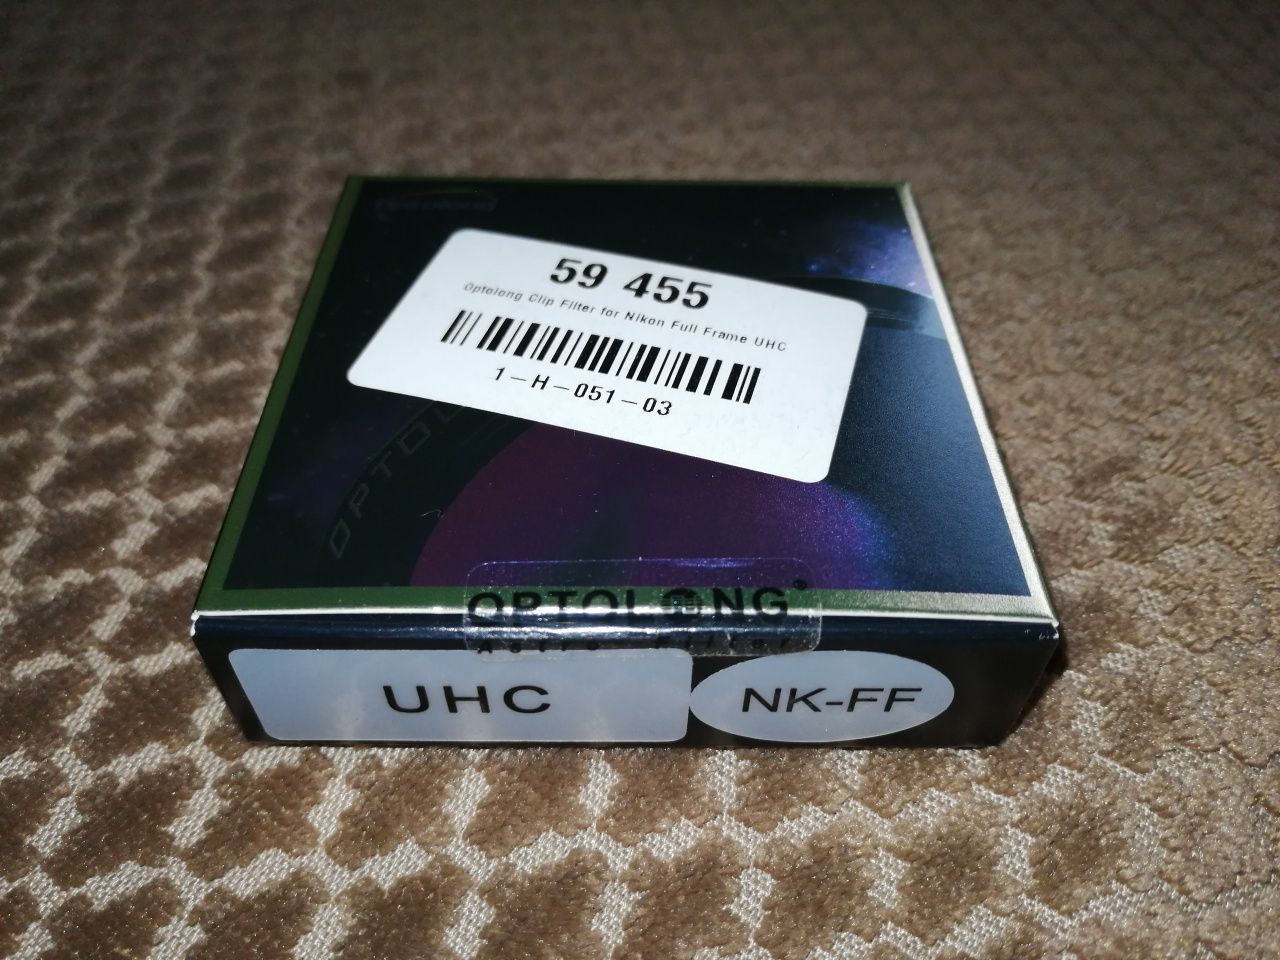 Filtru Optolong UHC pentru Nikon full frame